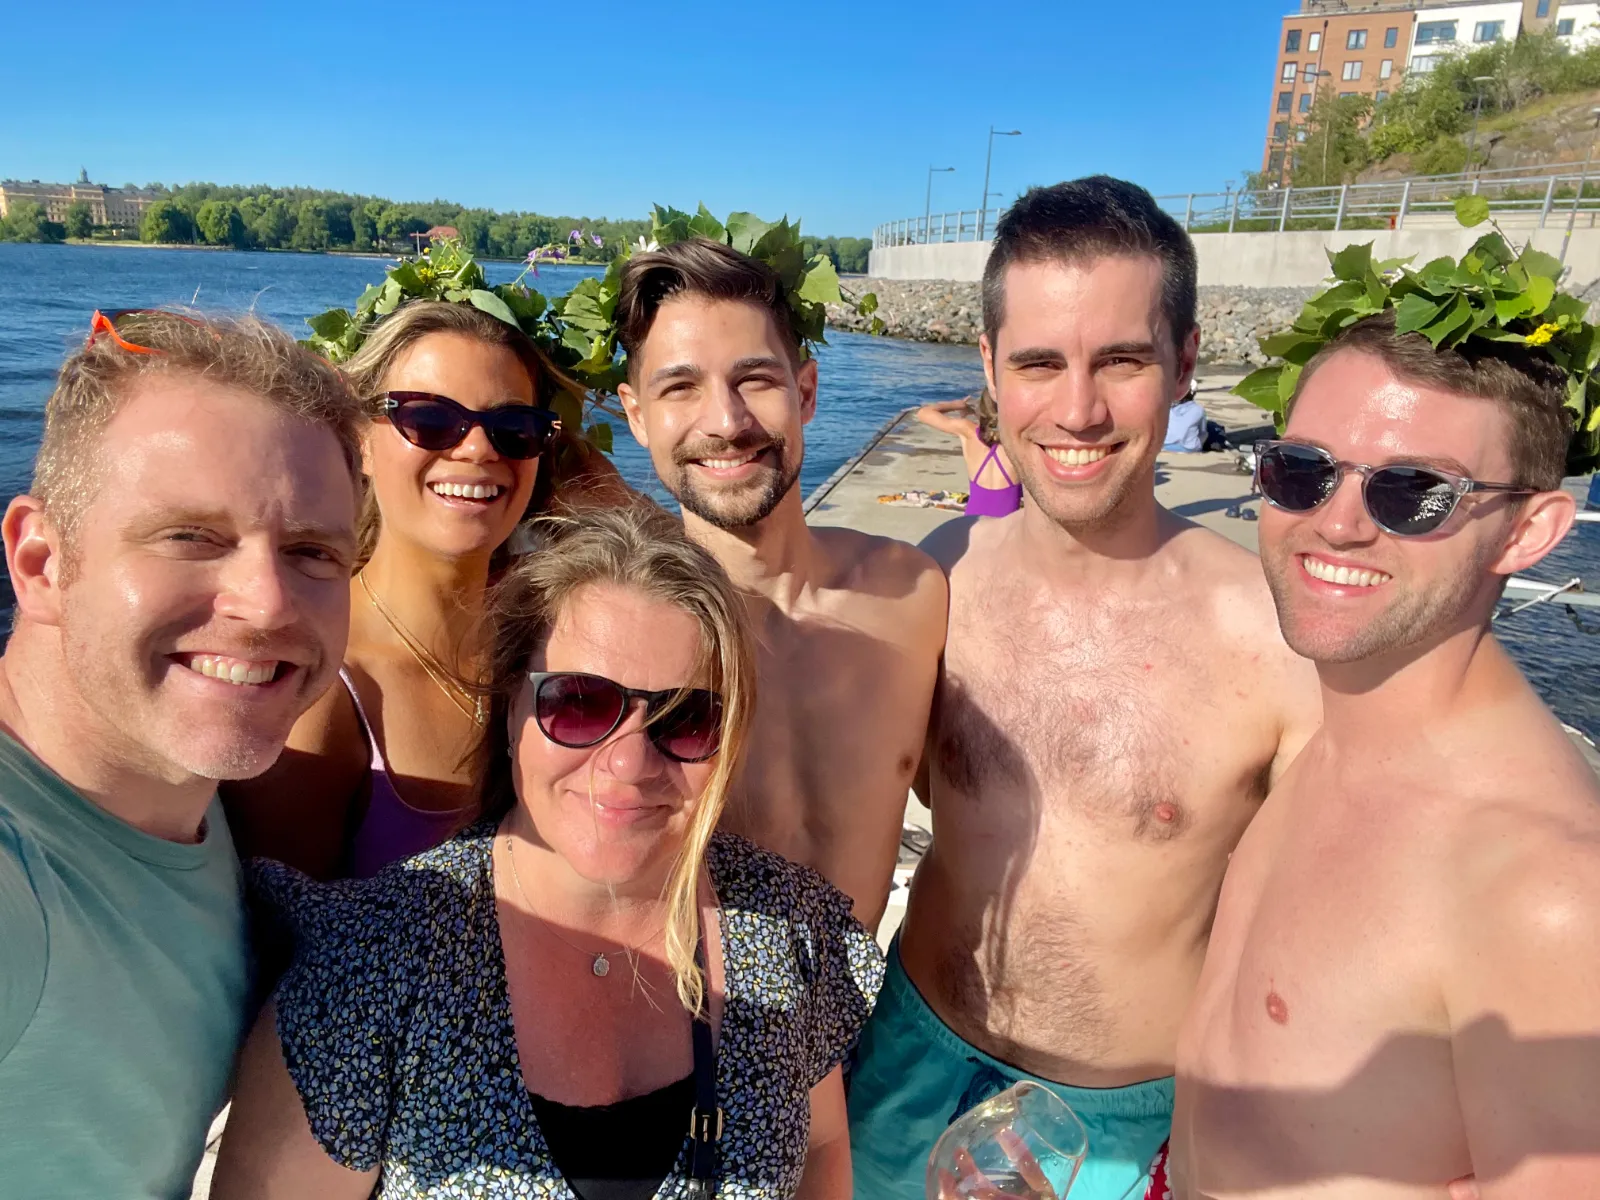 Group selfie on the dock